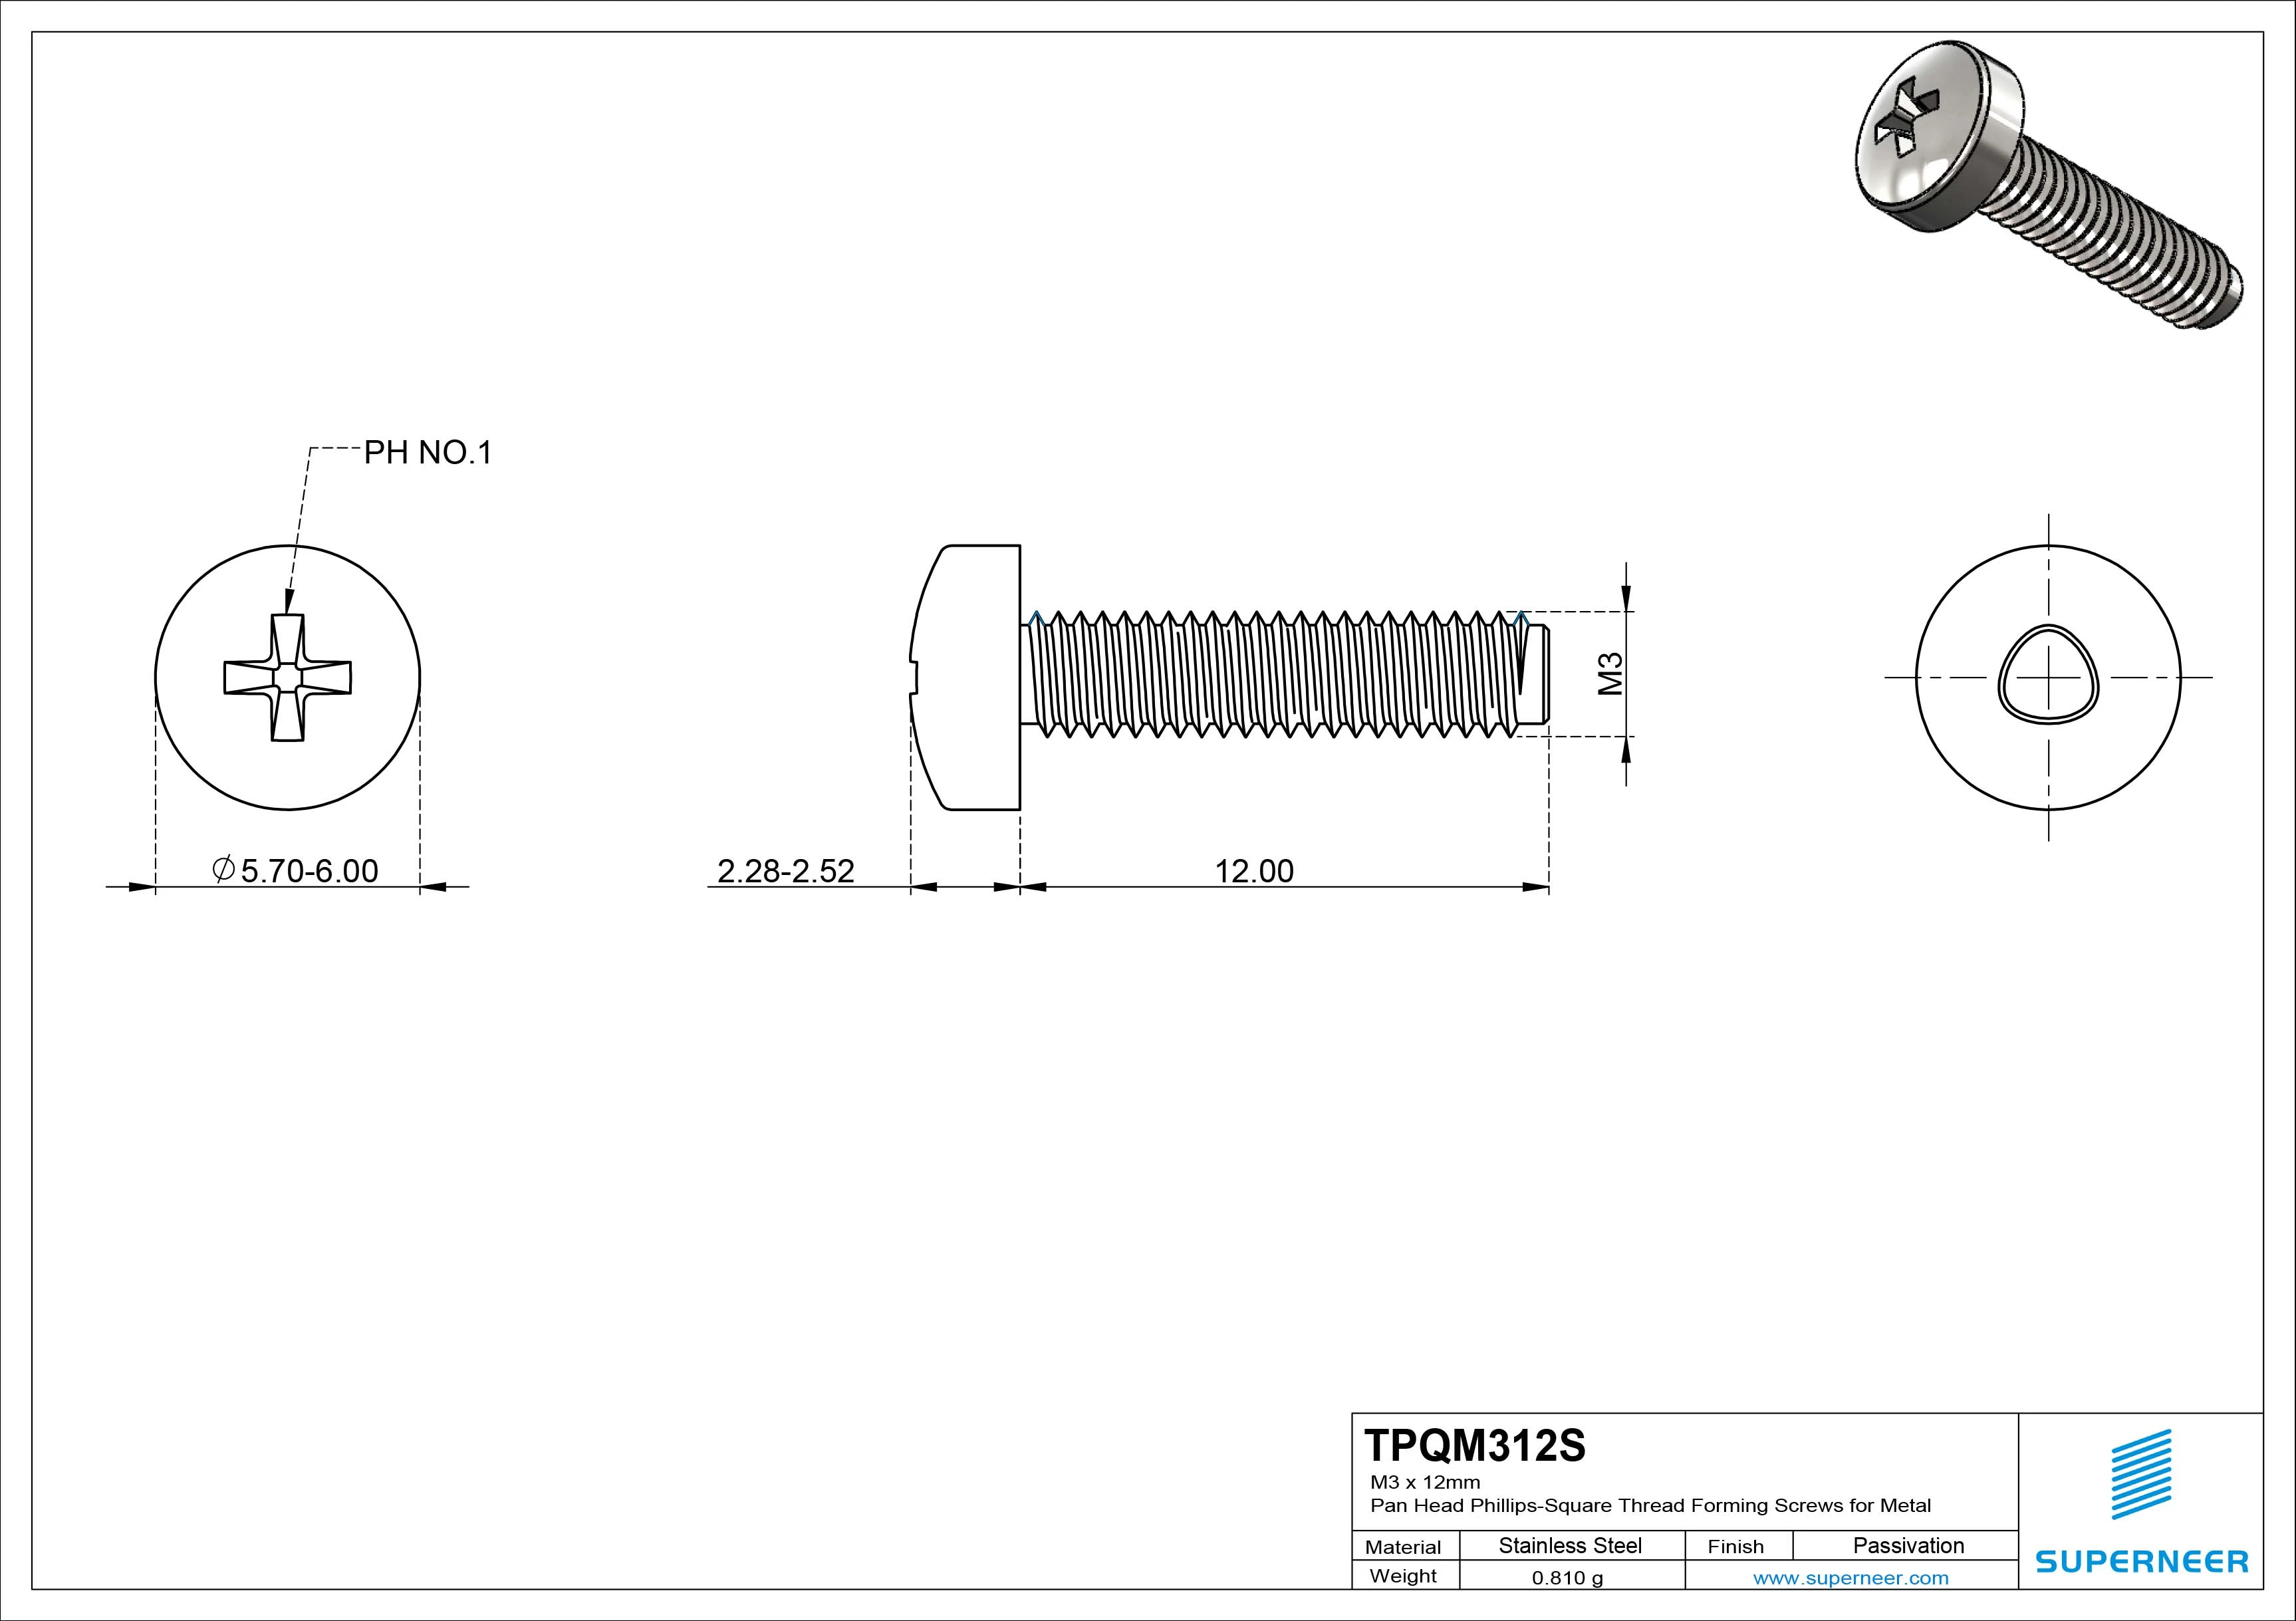 M3 × 12mm Pan Head Phillips-Square Thread Forming Screws for Metal SUS304 Stainless Steel Inox